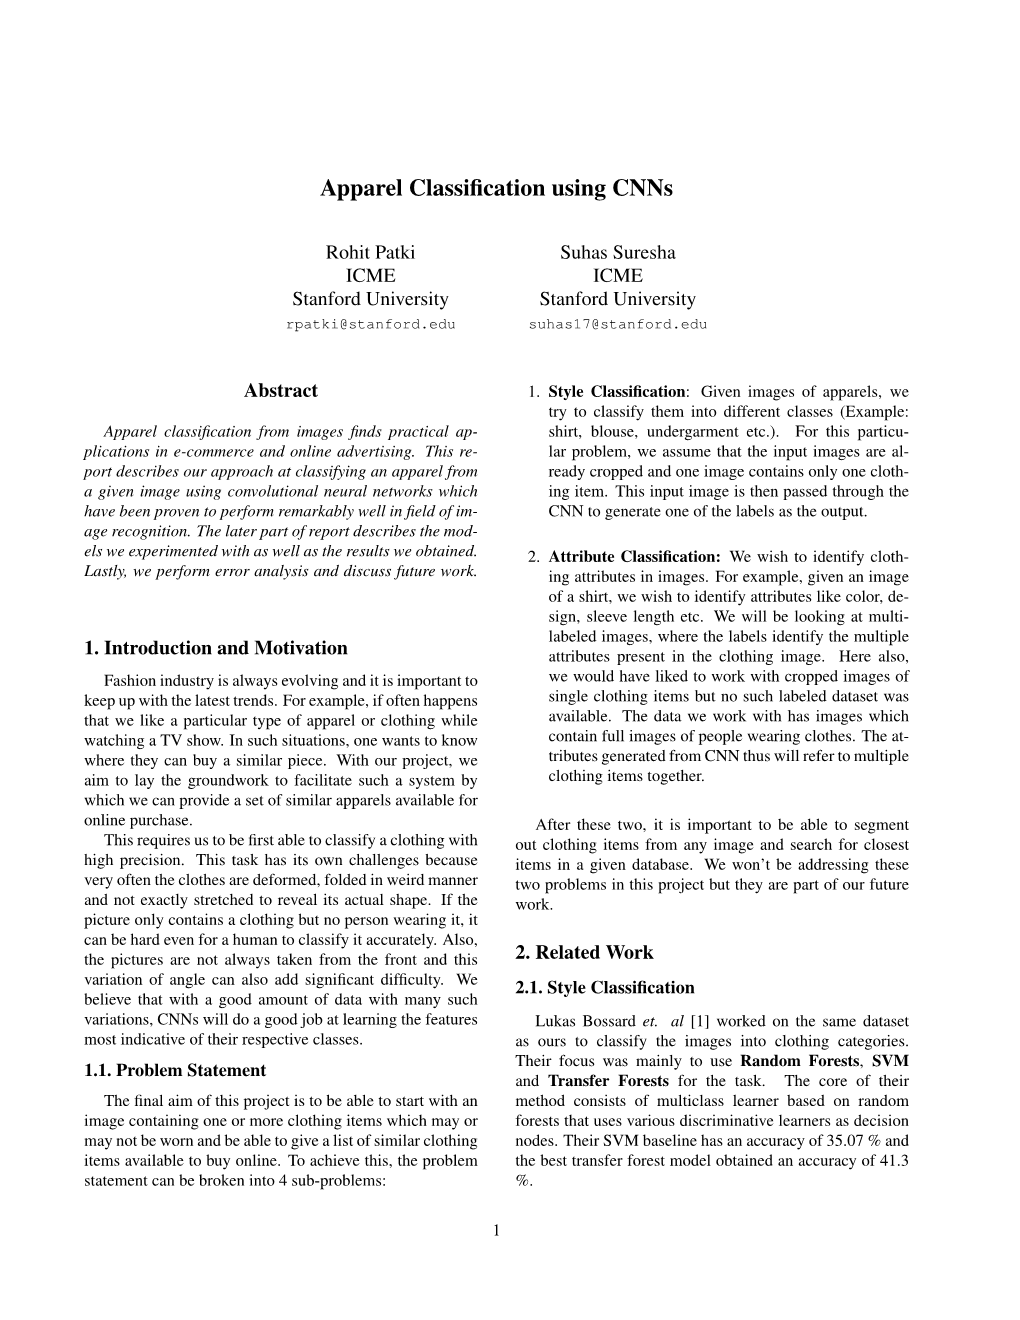 Apparel Classification Using Cnns